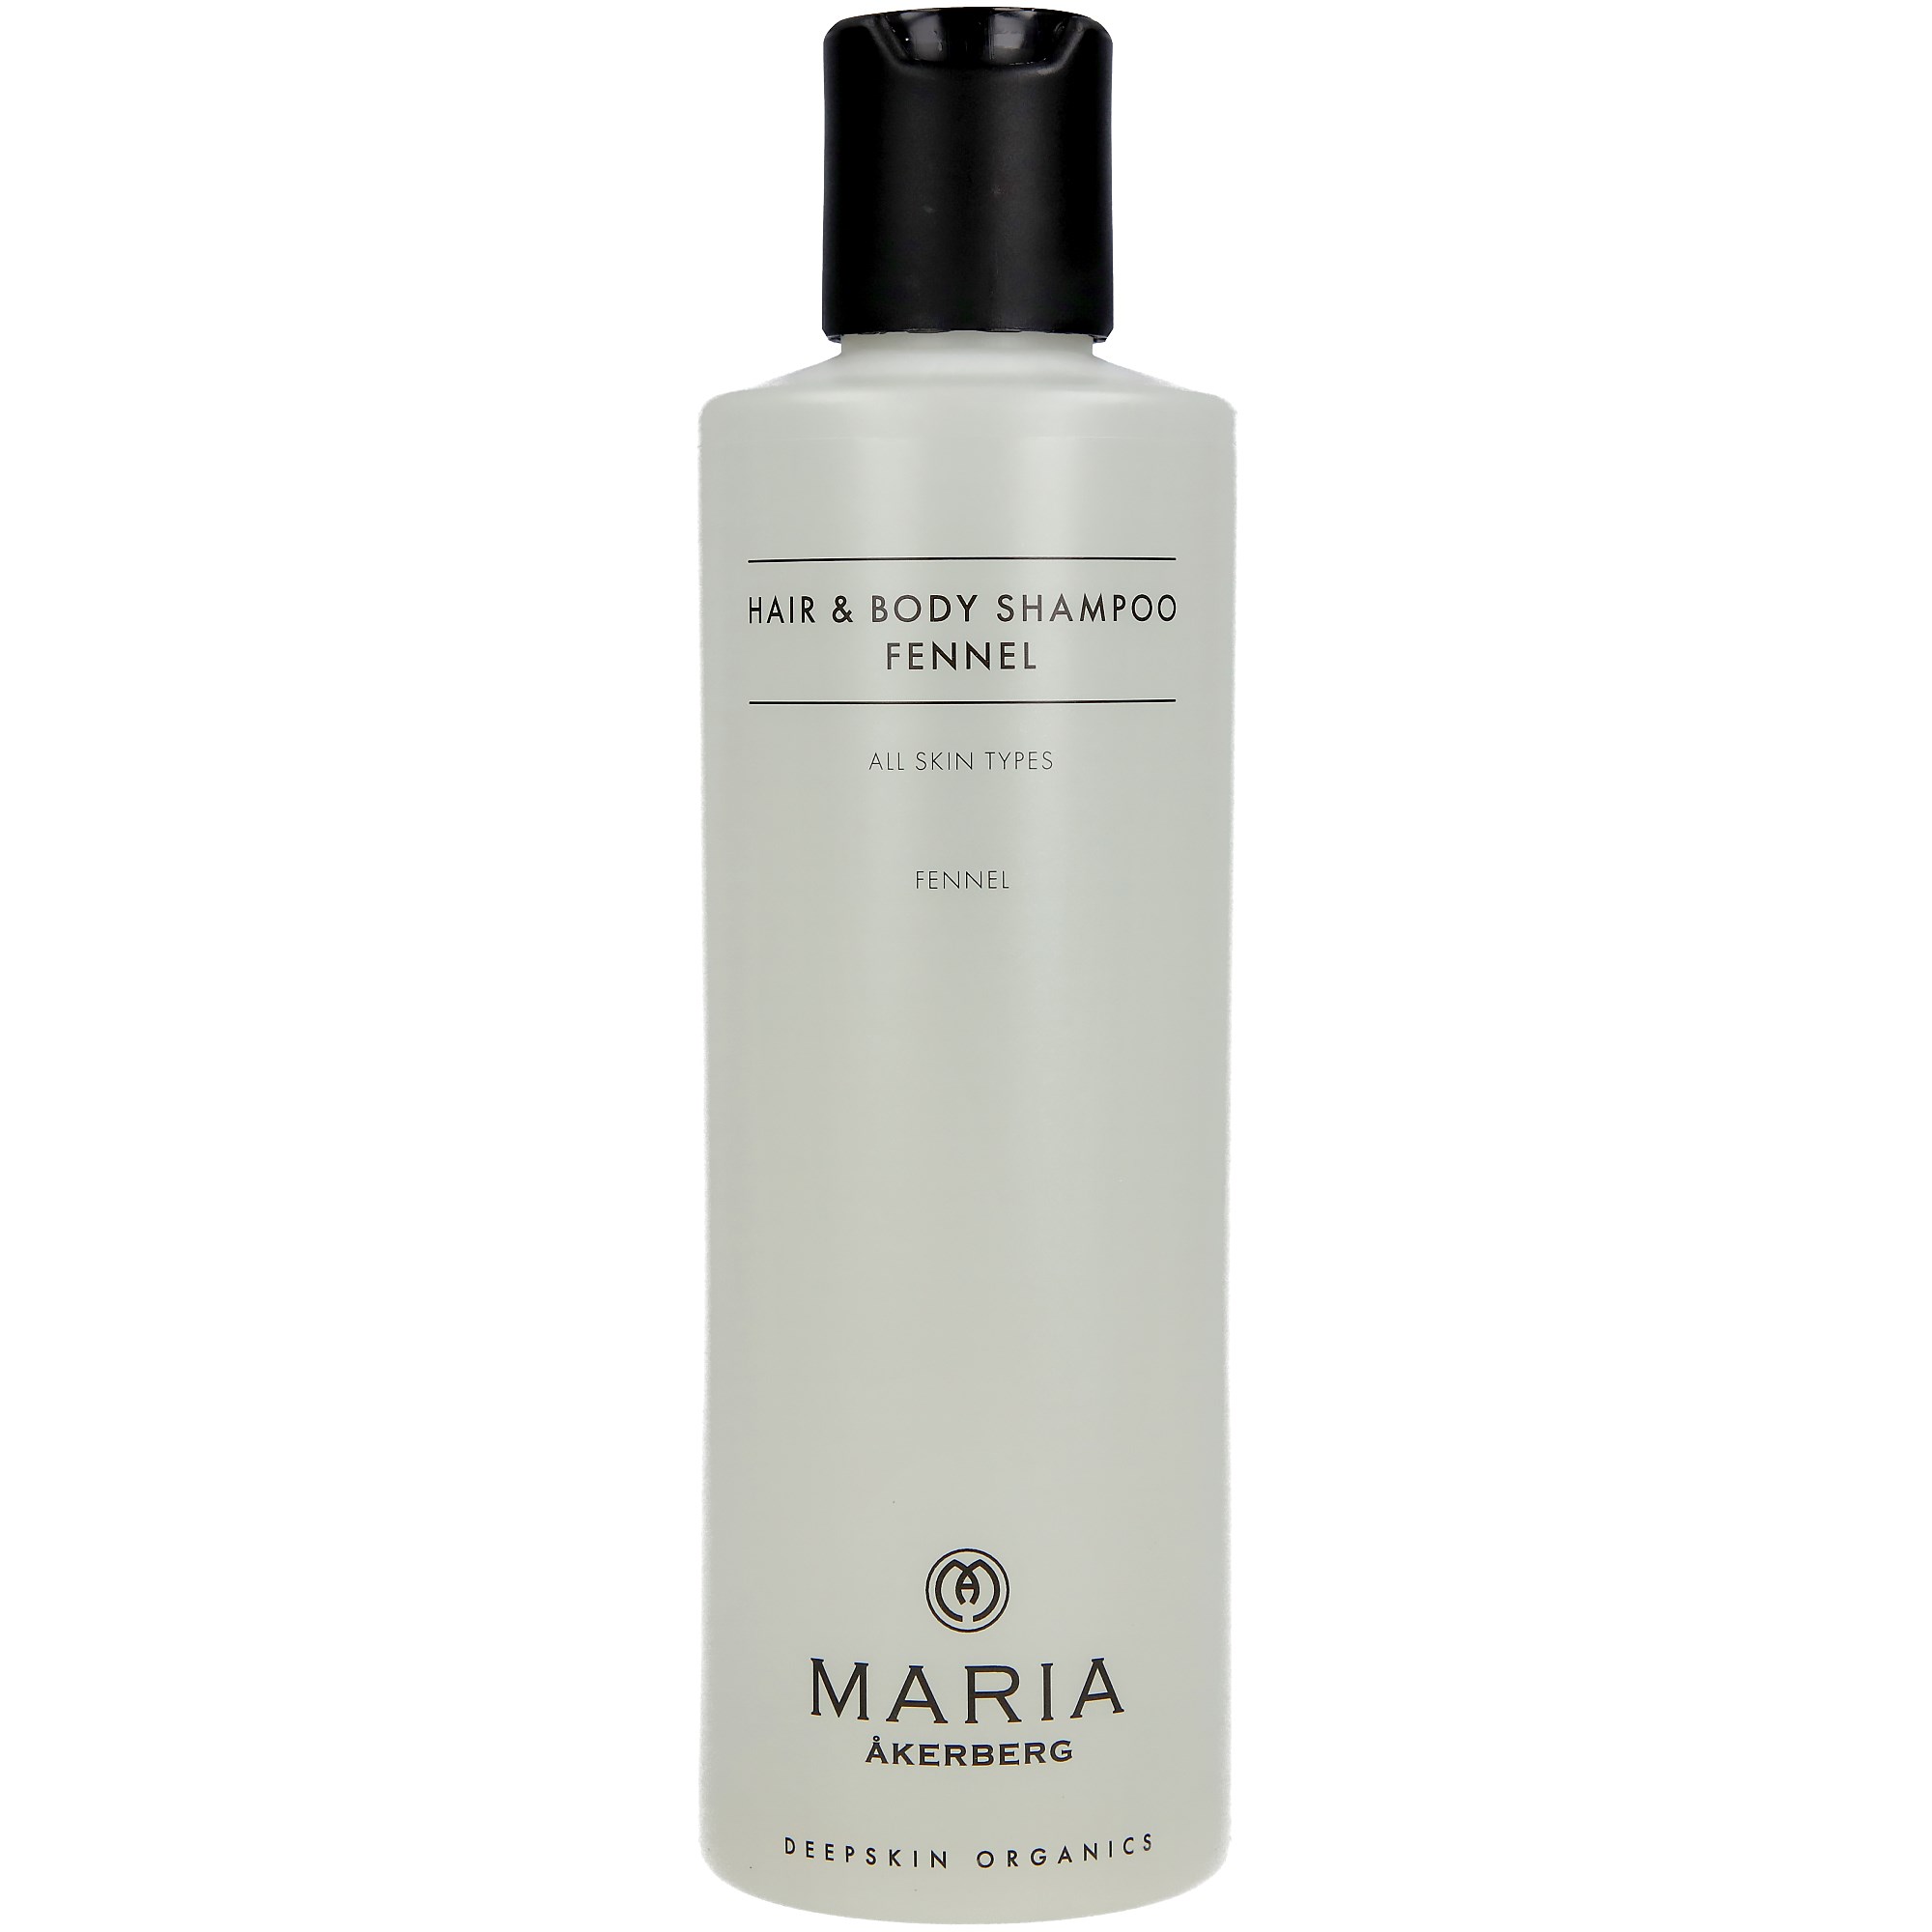 Maria Åkerberg Hair & Body Shampoo Fennel 250 ml